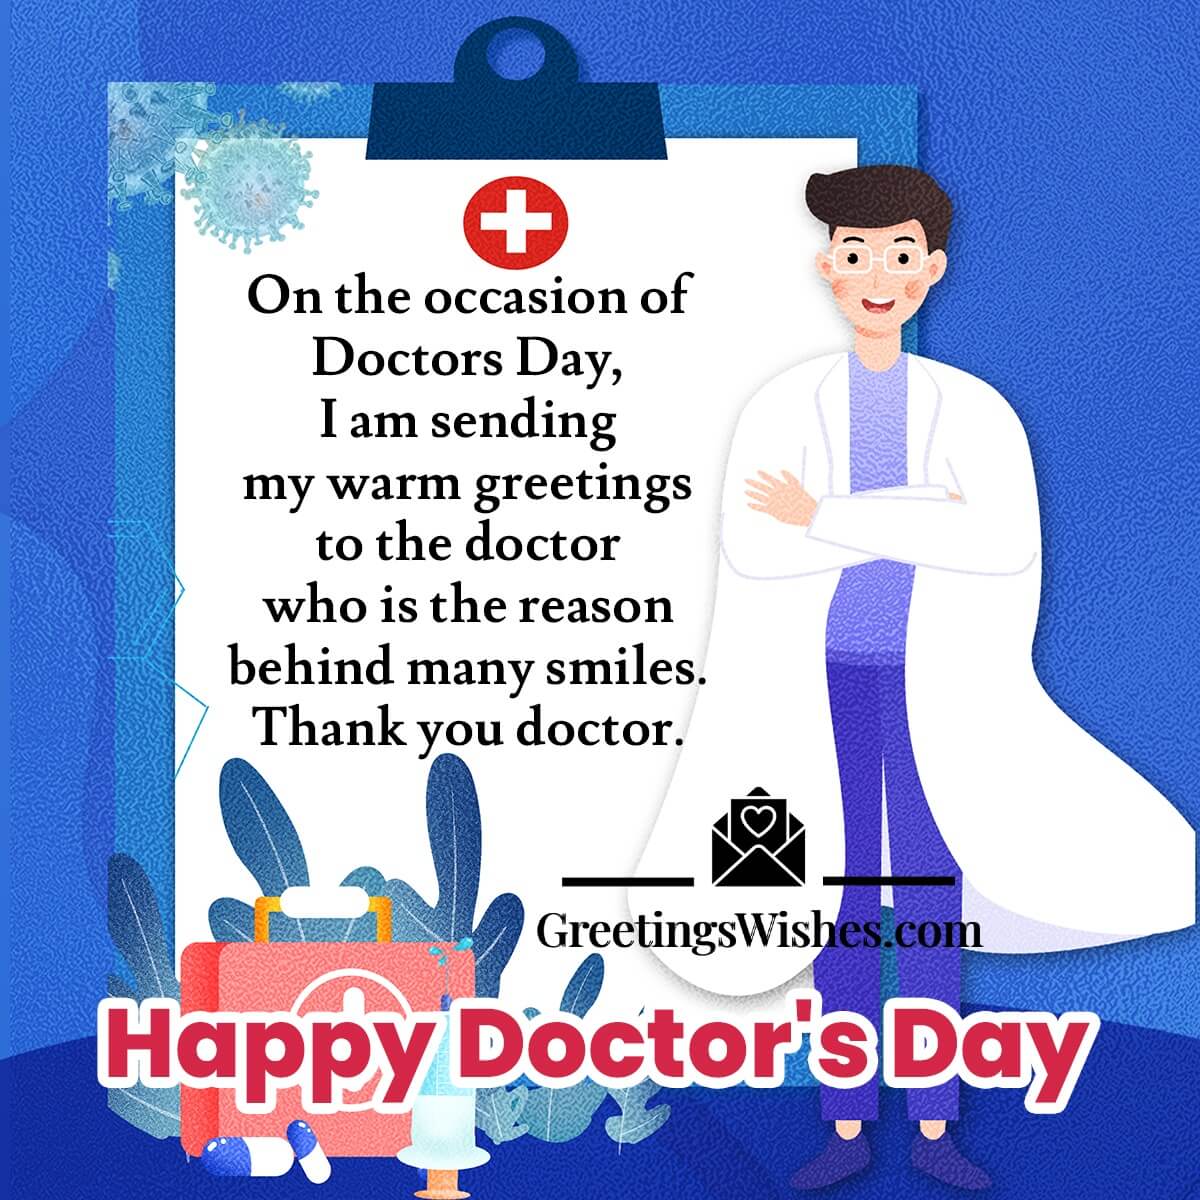 Happy Doctors’ Day Greetings